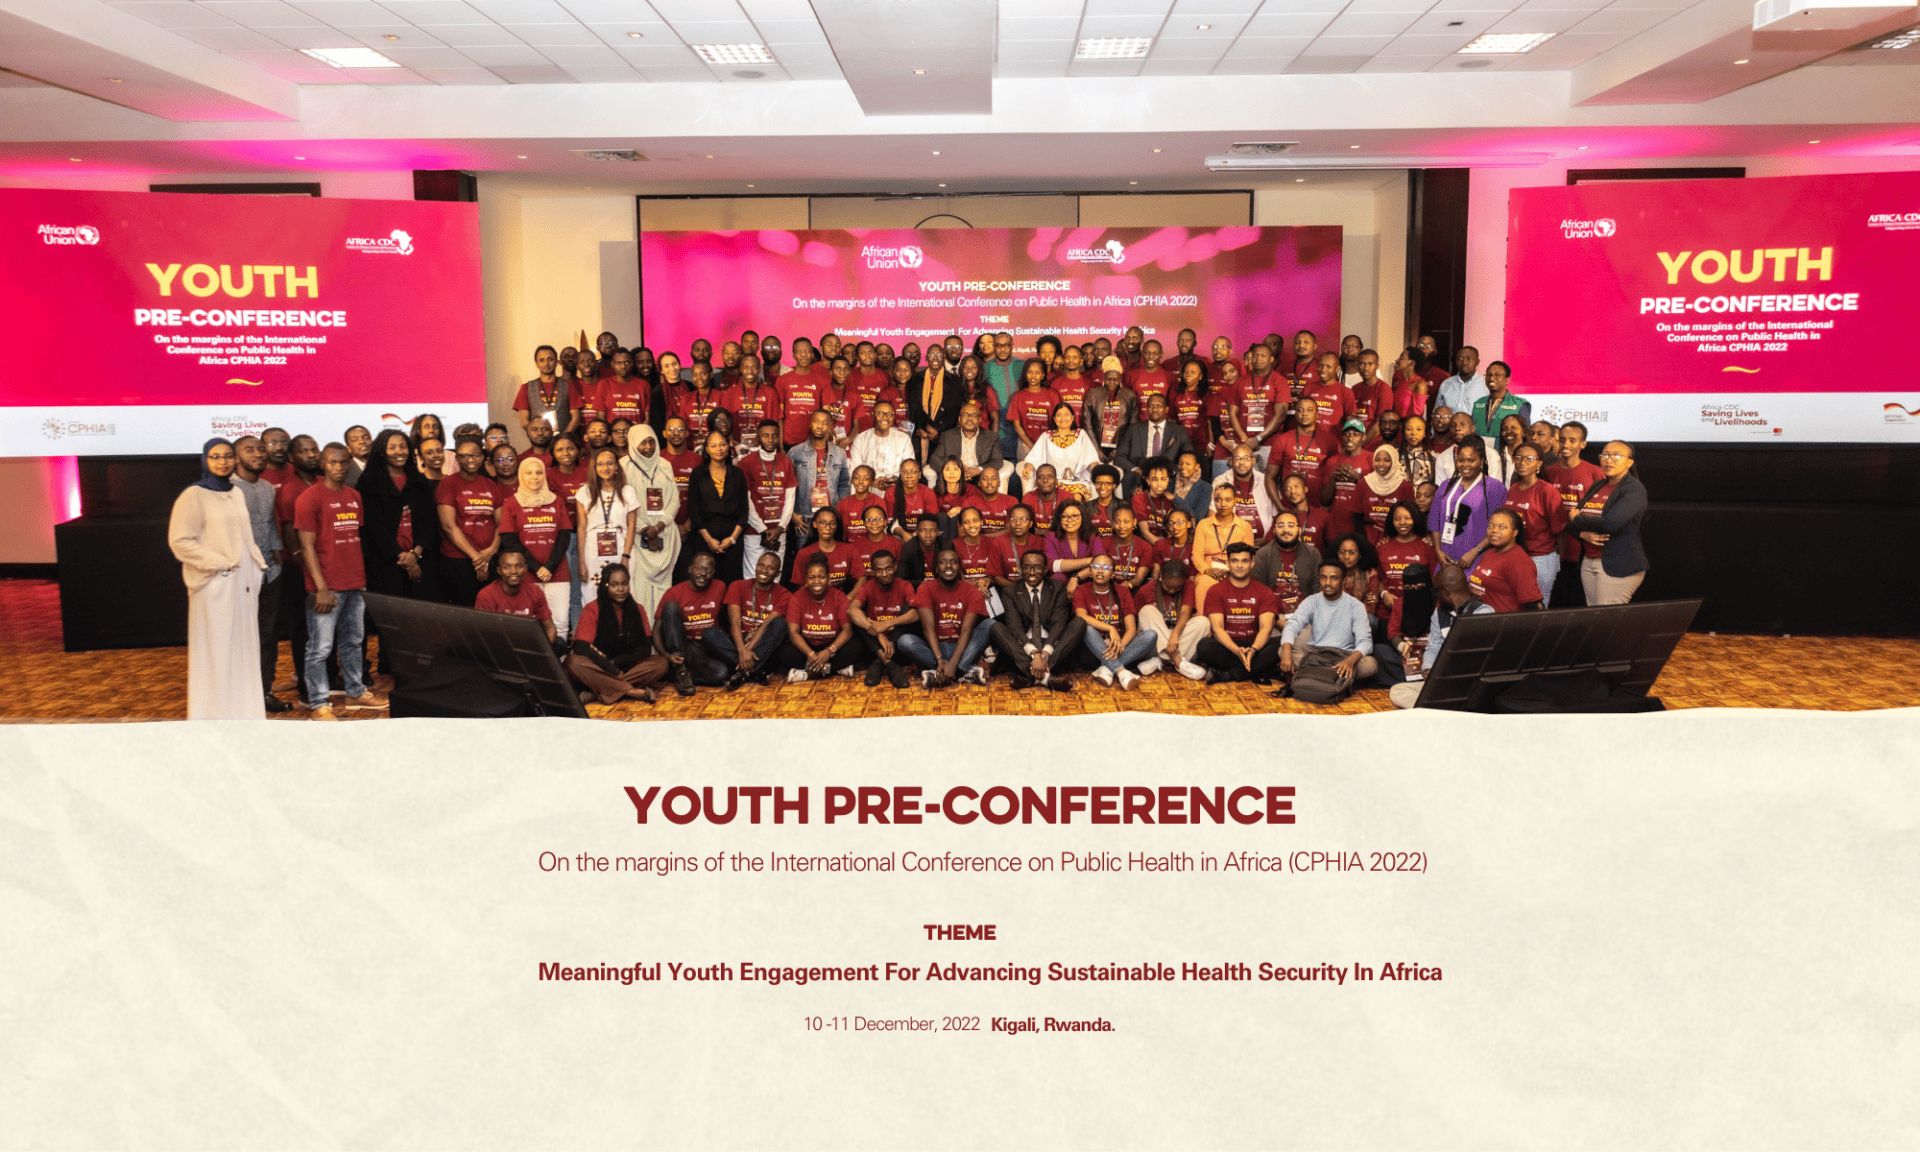 Youth Pre-Conference 2022 in Kigali, Rwanda